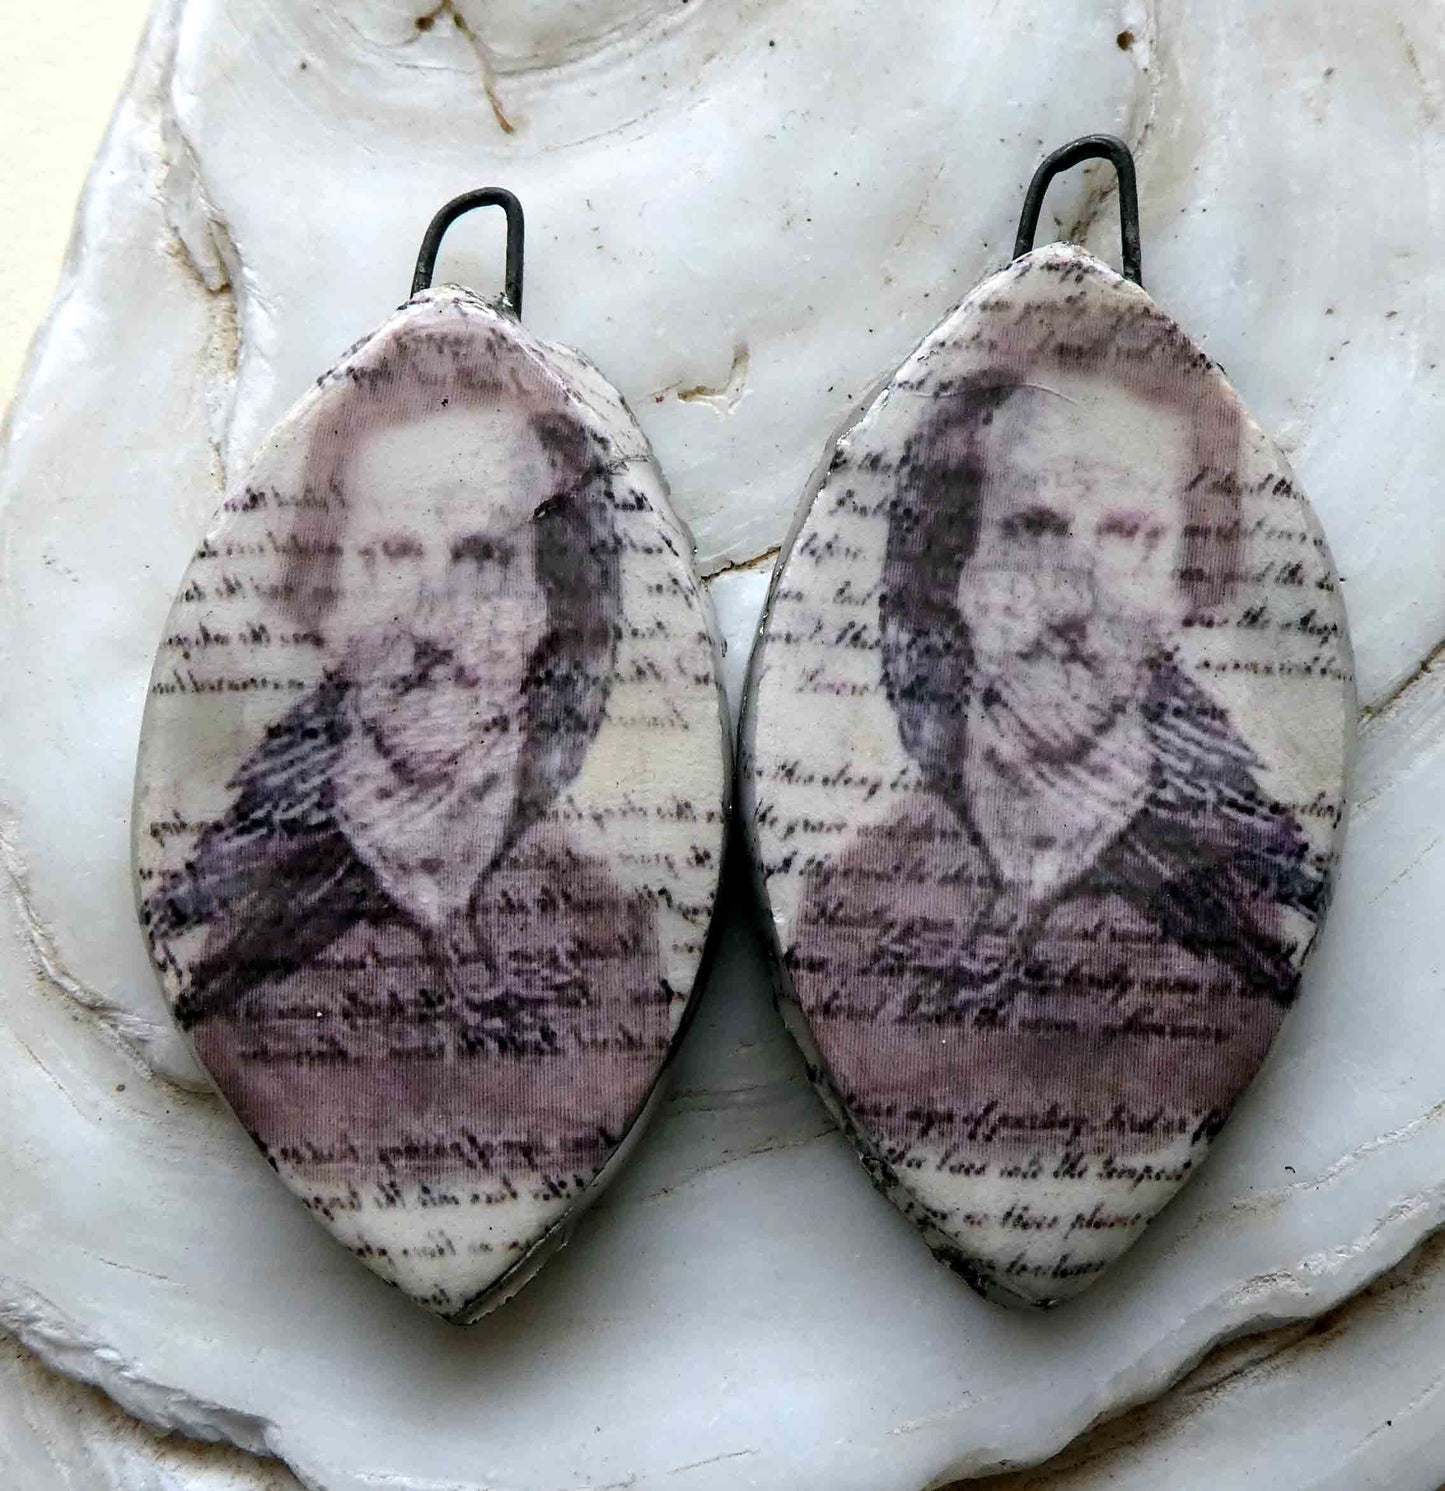 Ceramic Decal Earring Charms -Edgar Allan Poe